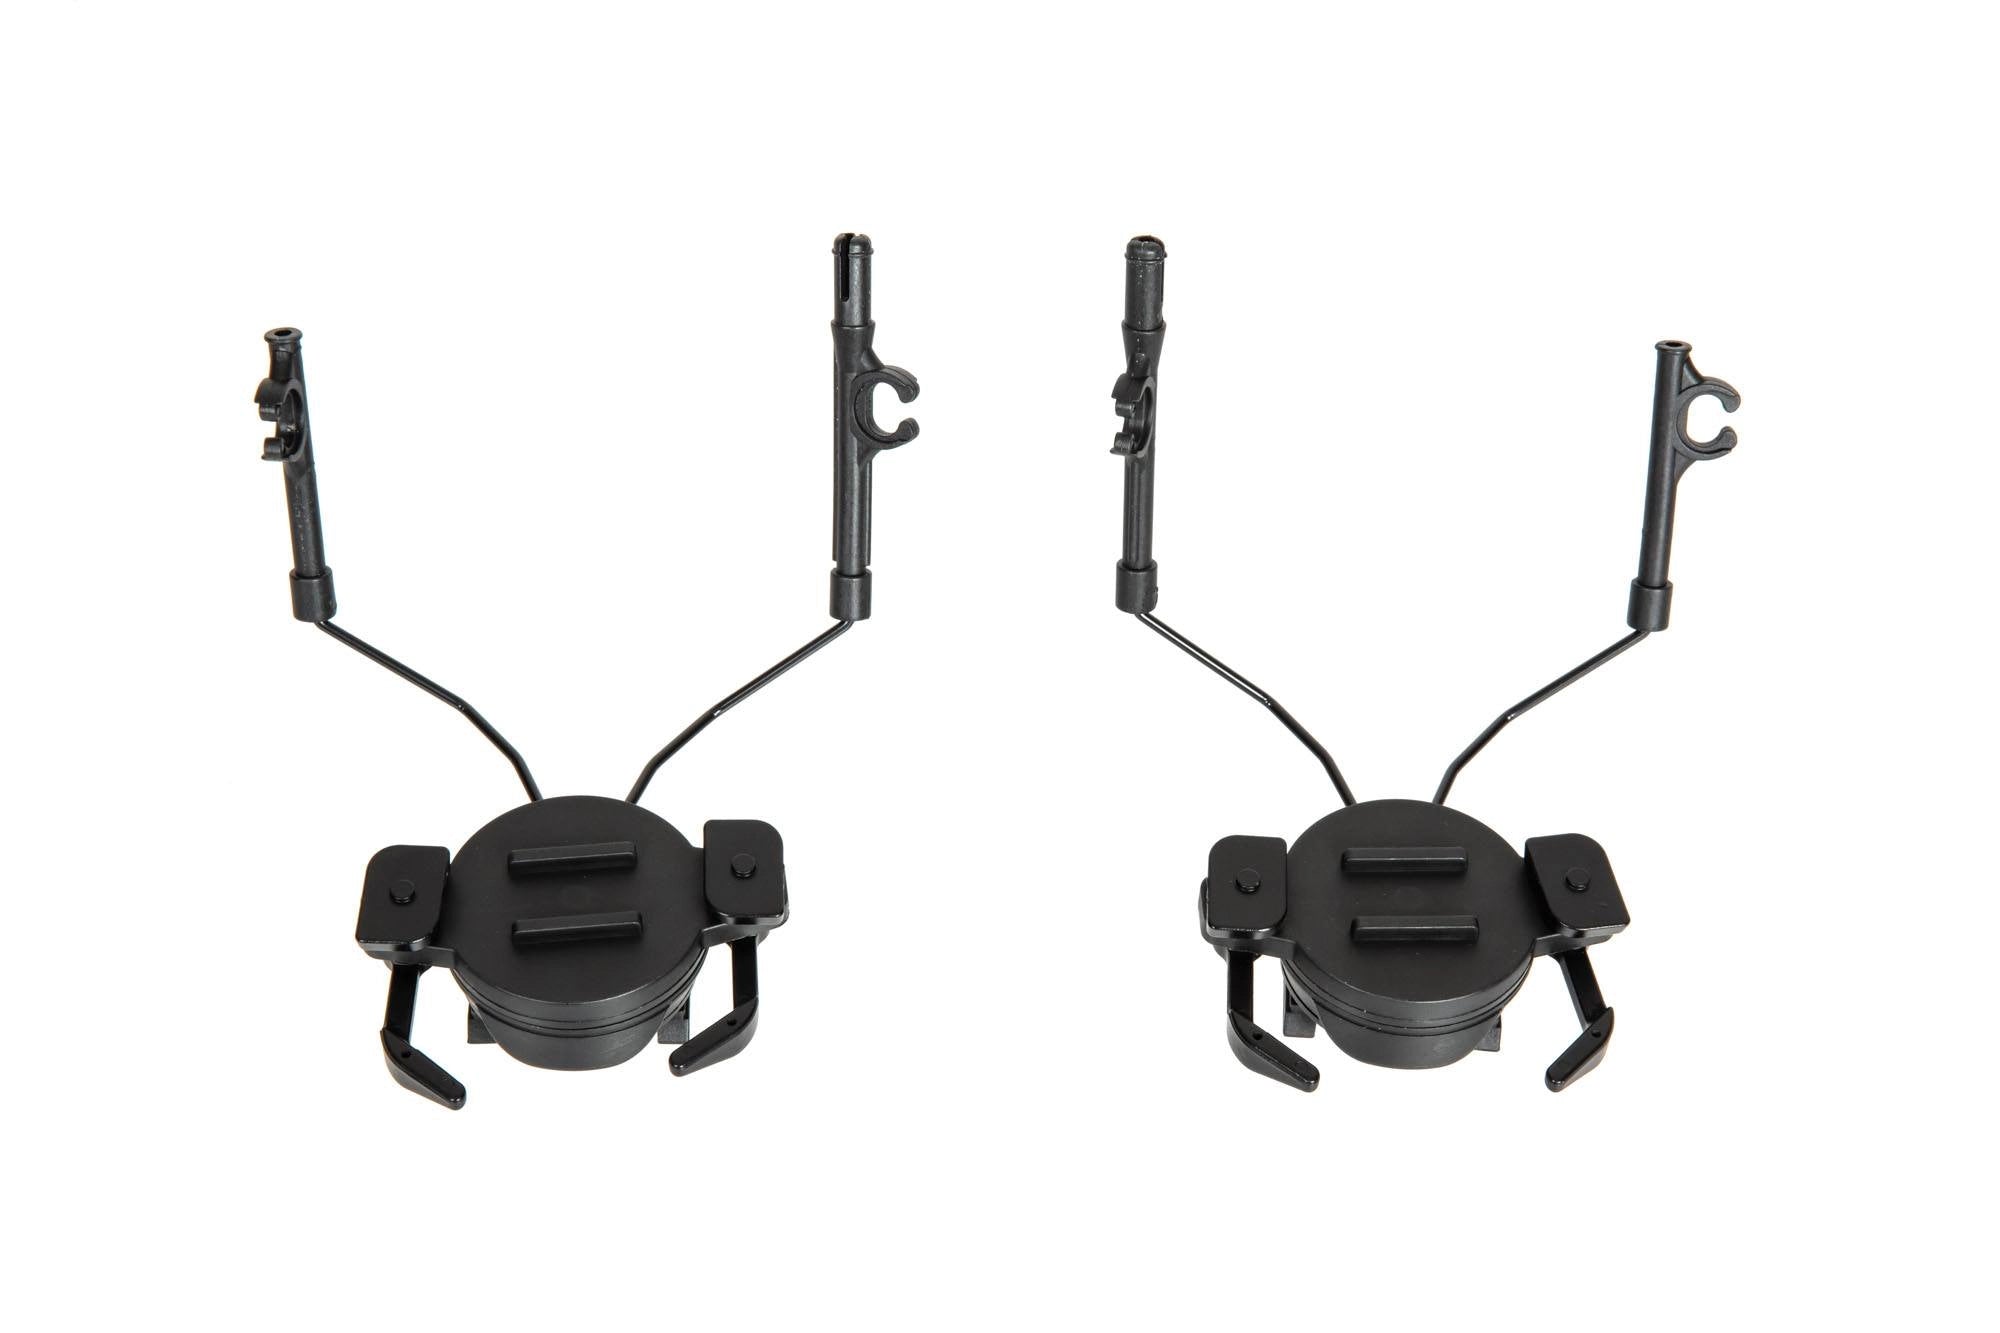 Mounting headphones for FAST / Opscore helmets (19-21mm) - Black